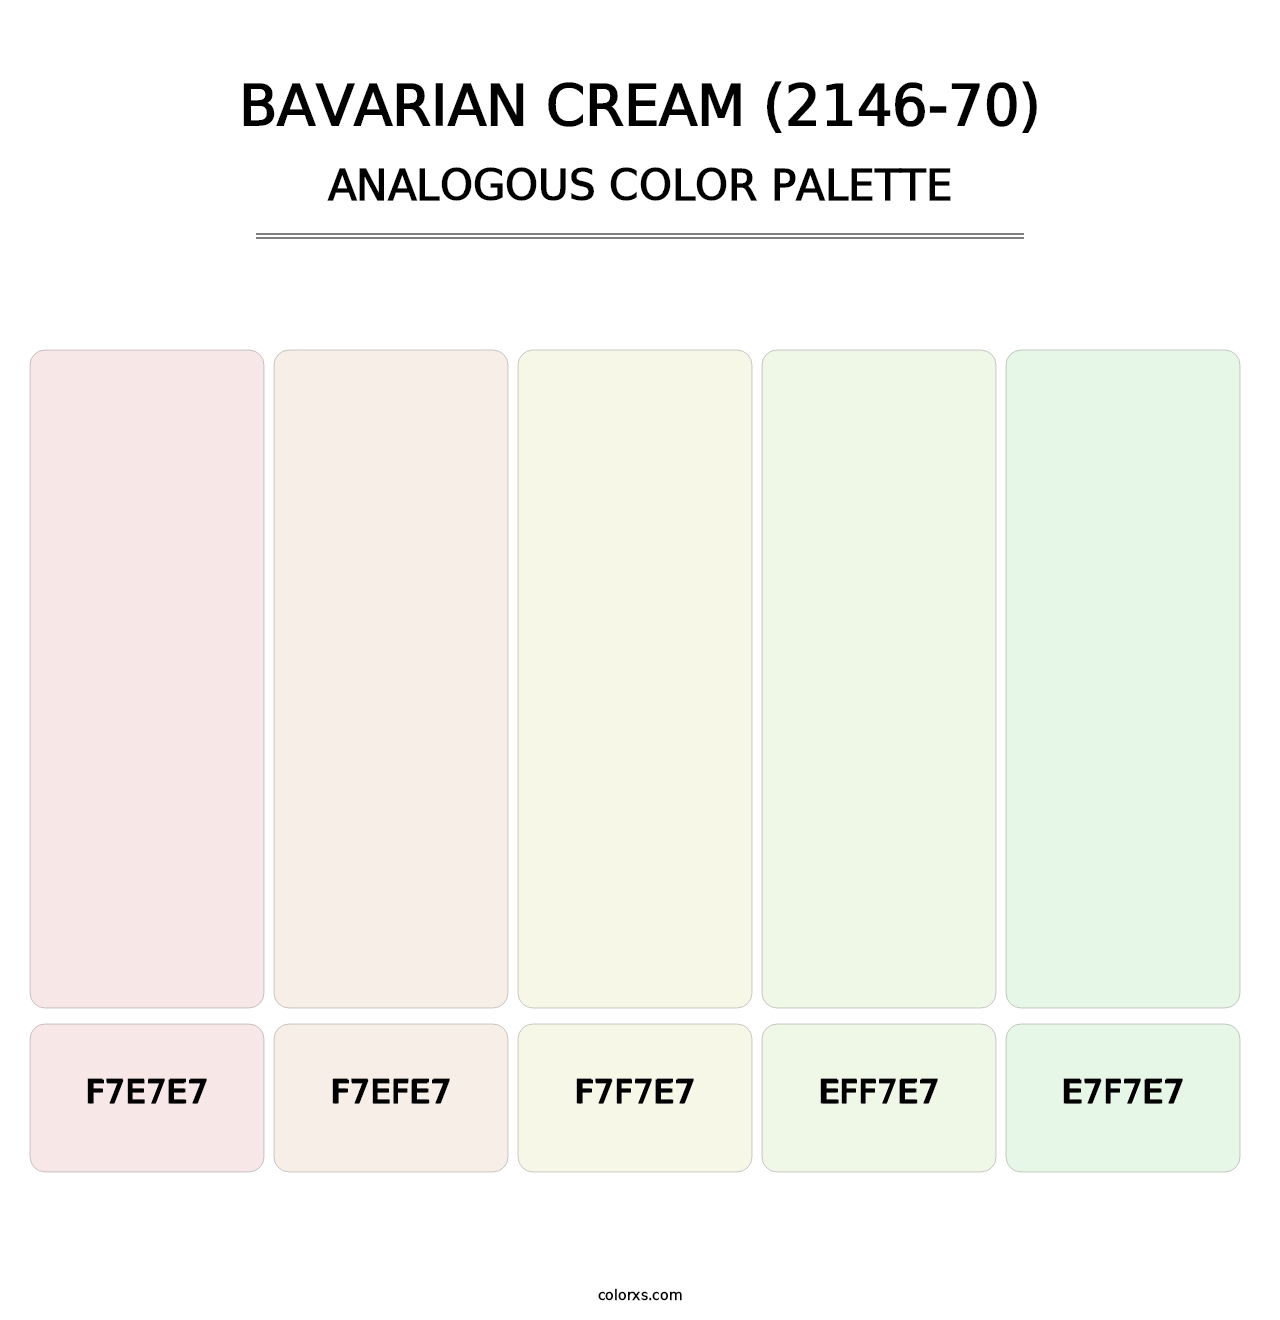 Bavarian Cream (2146-70) - Analogous Color Palette